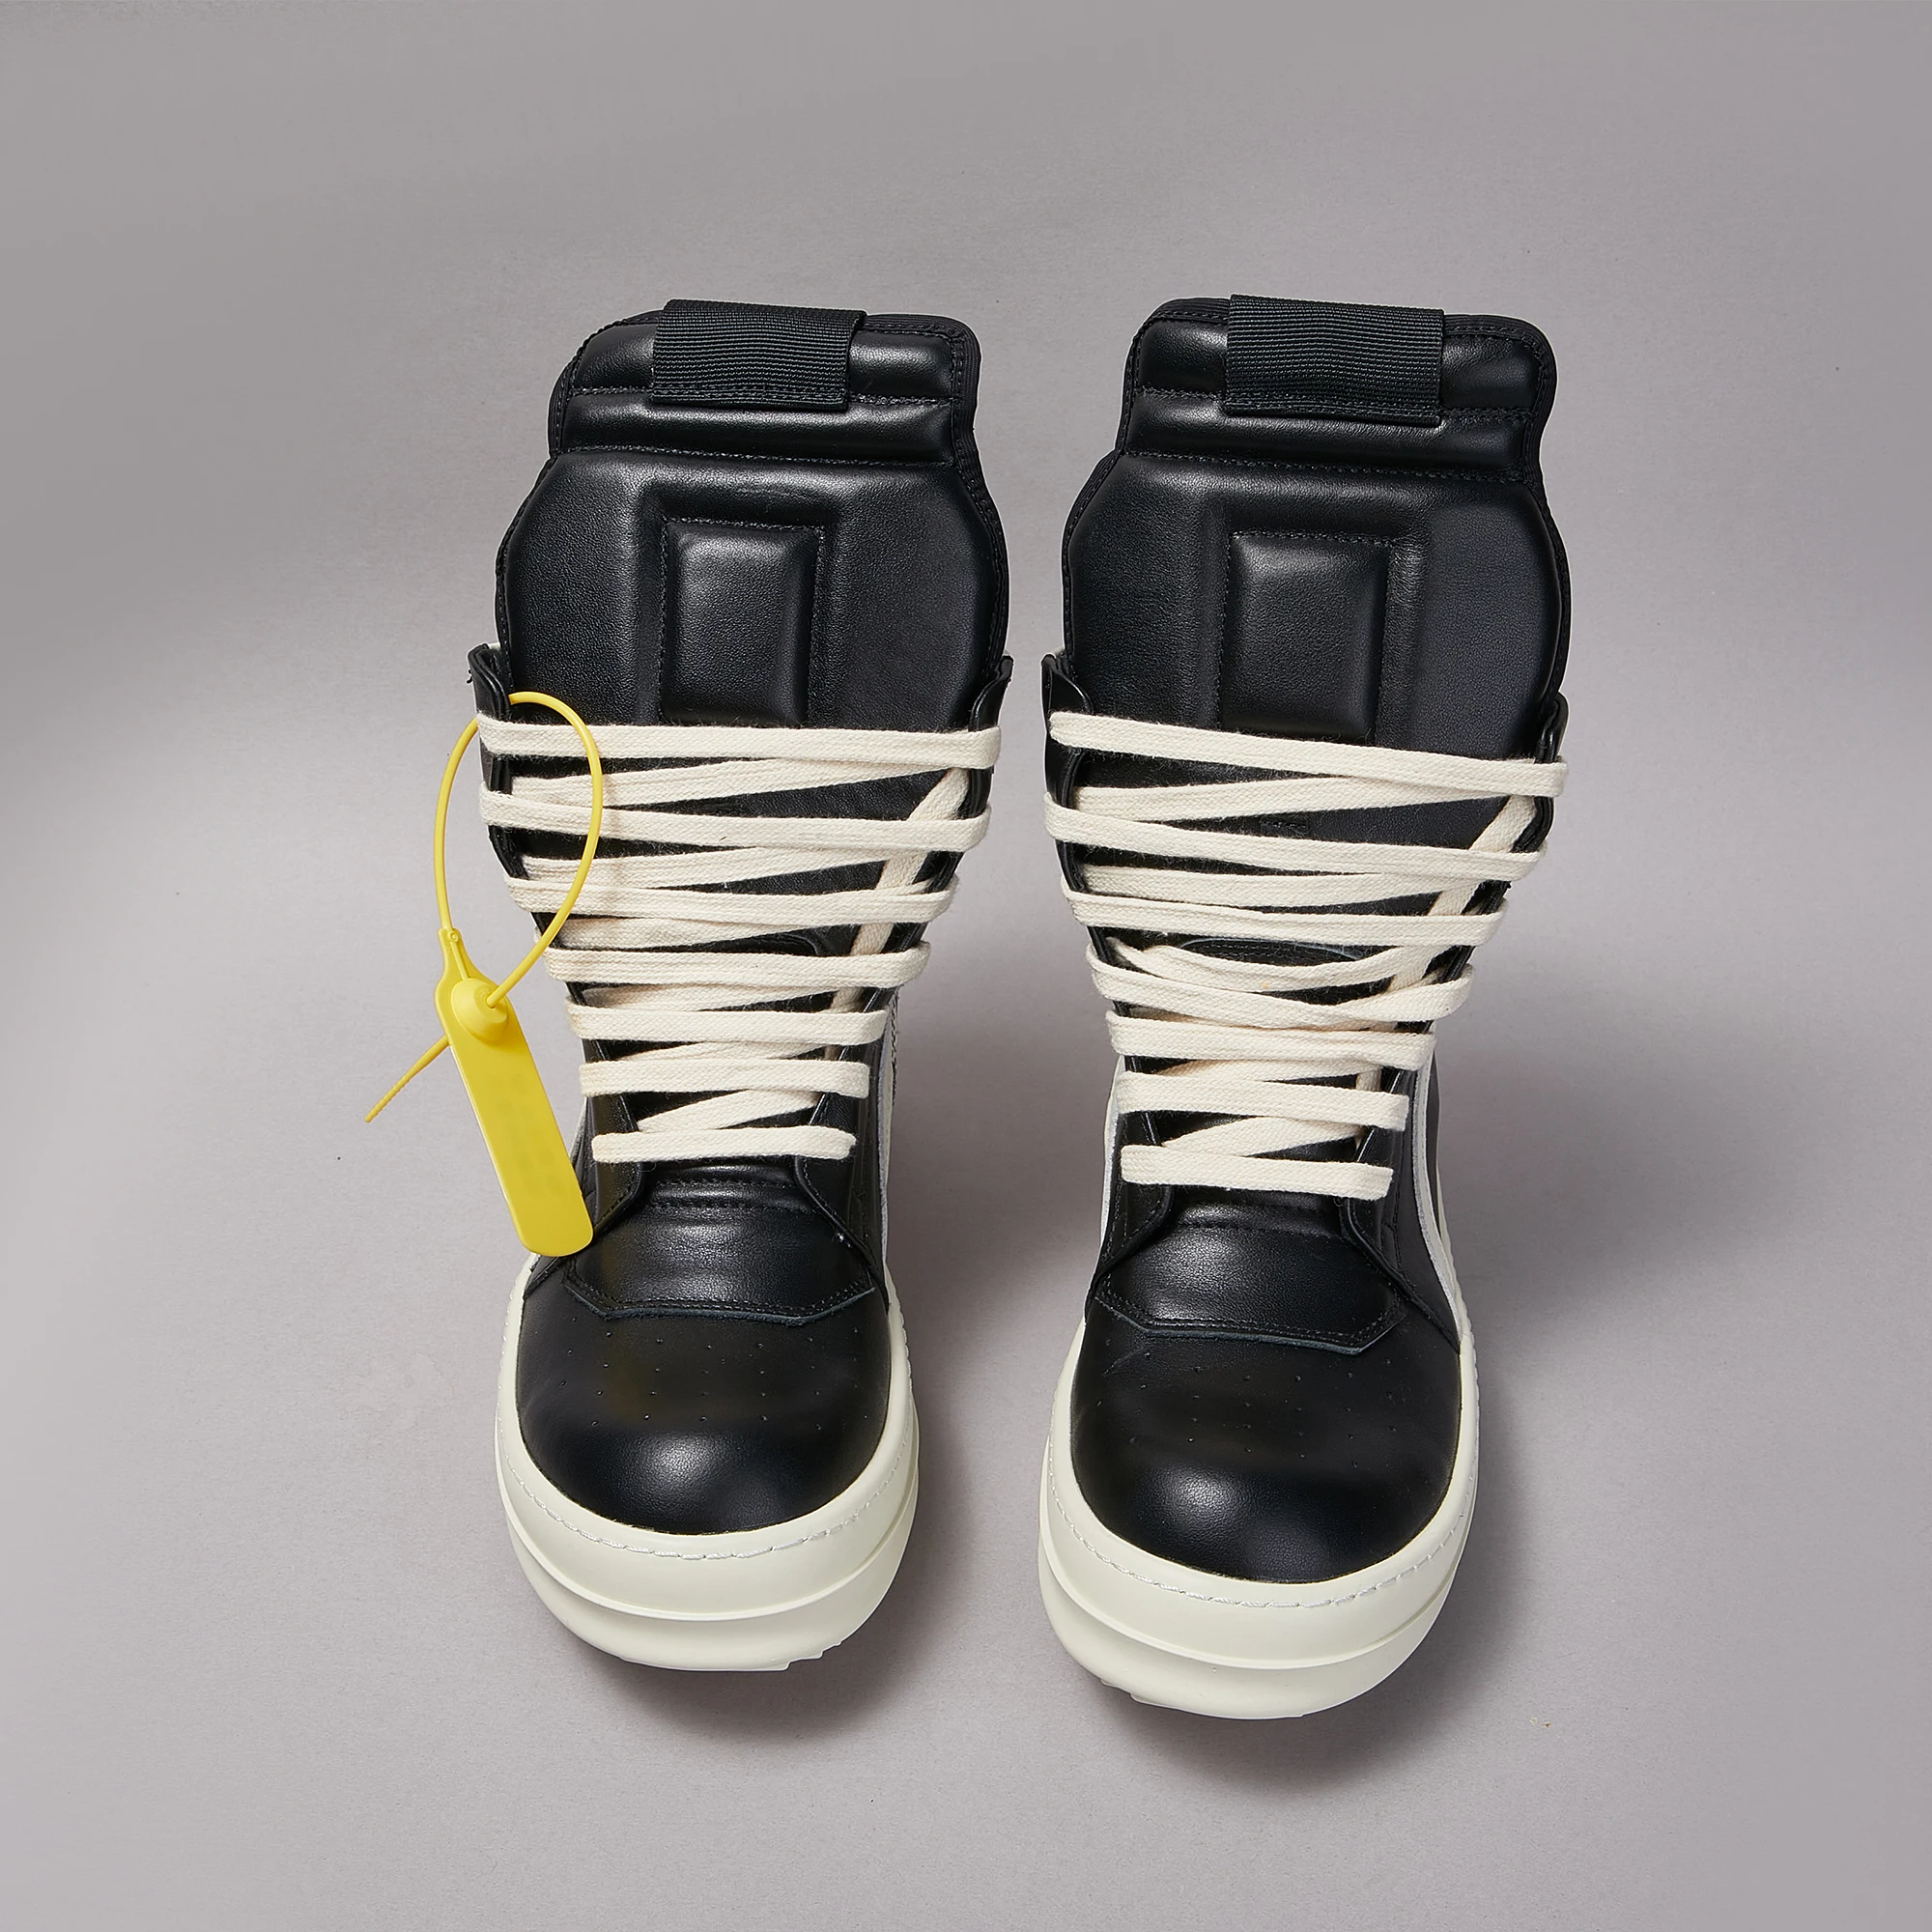 Brand Men Shoe Casual High Top Quality owen Women Sneaker Black Ankle Boot Geobasket Leather Fashion Thick-sole Flat Zip Shoe